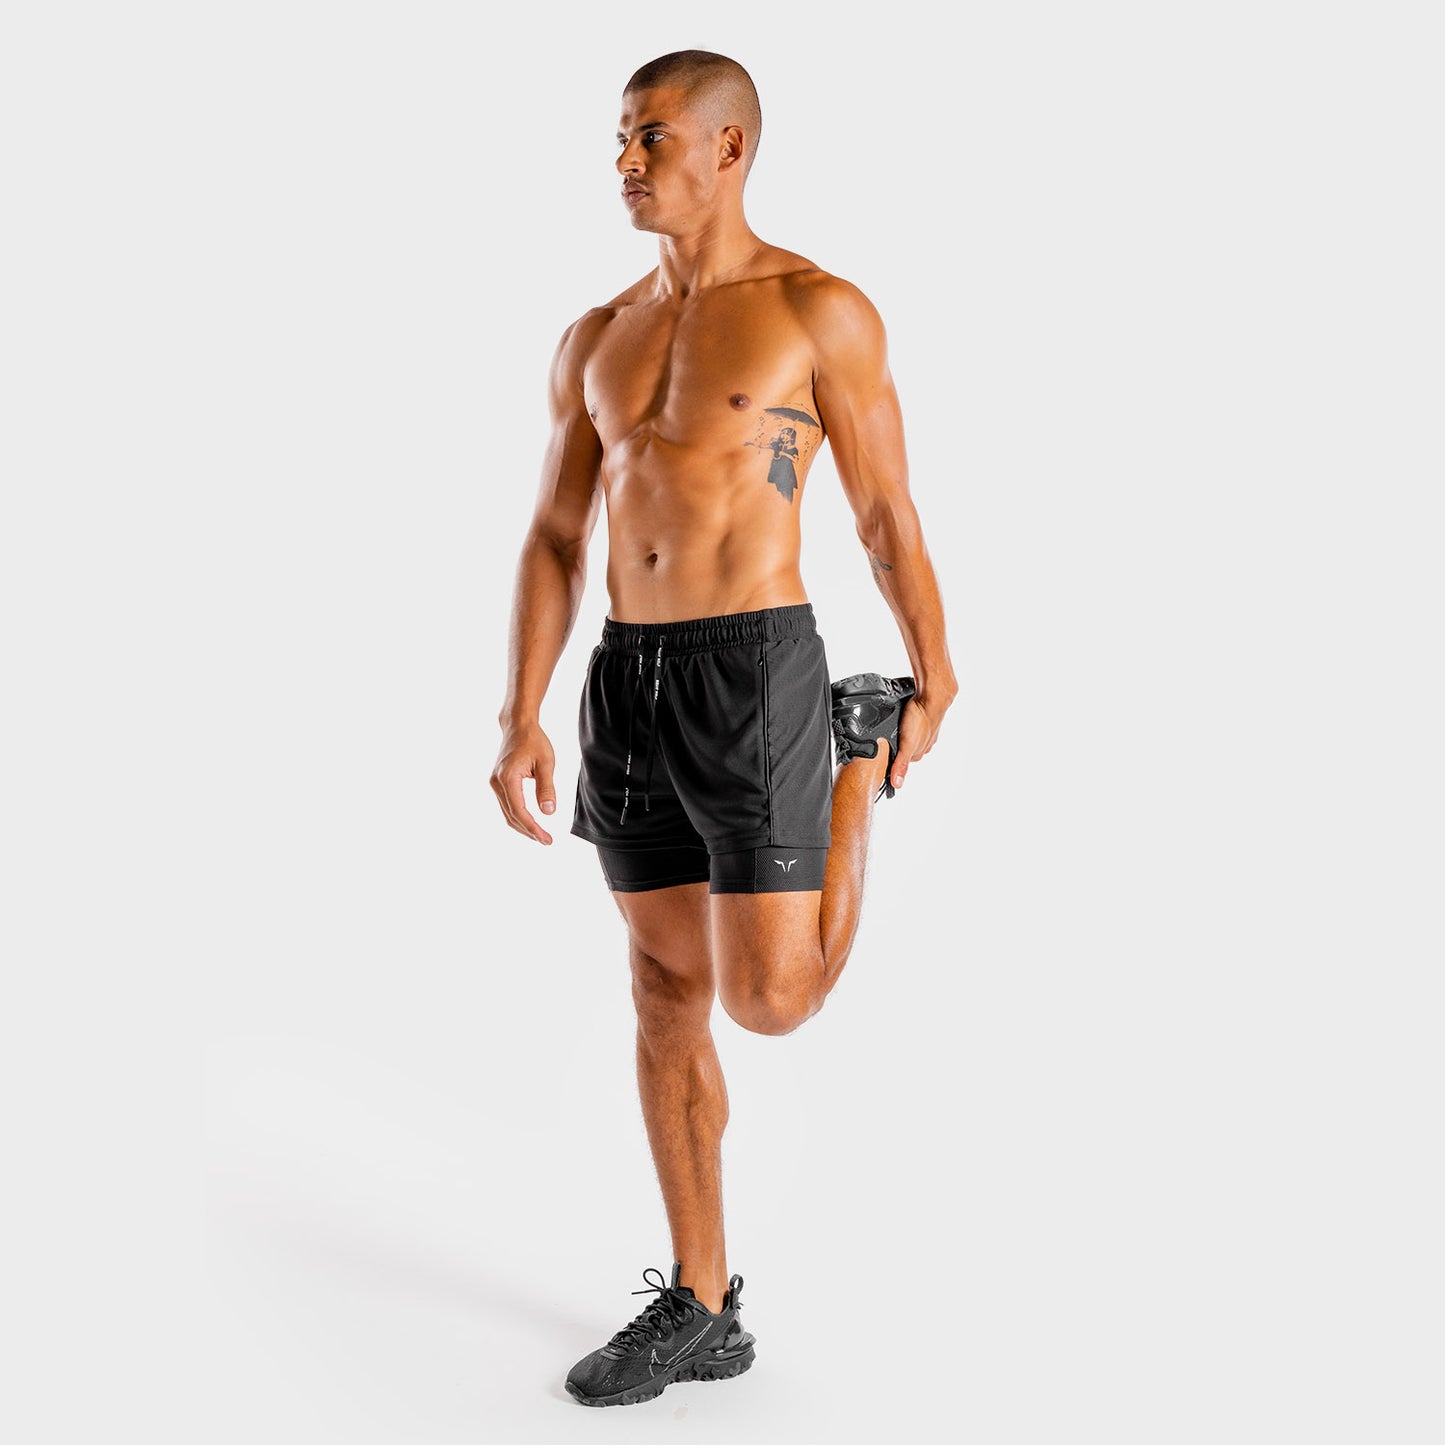 squatwolf-workout-short-for-men-hybrid-2-in-1-shorts-black-gym-wear